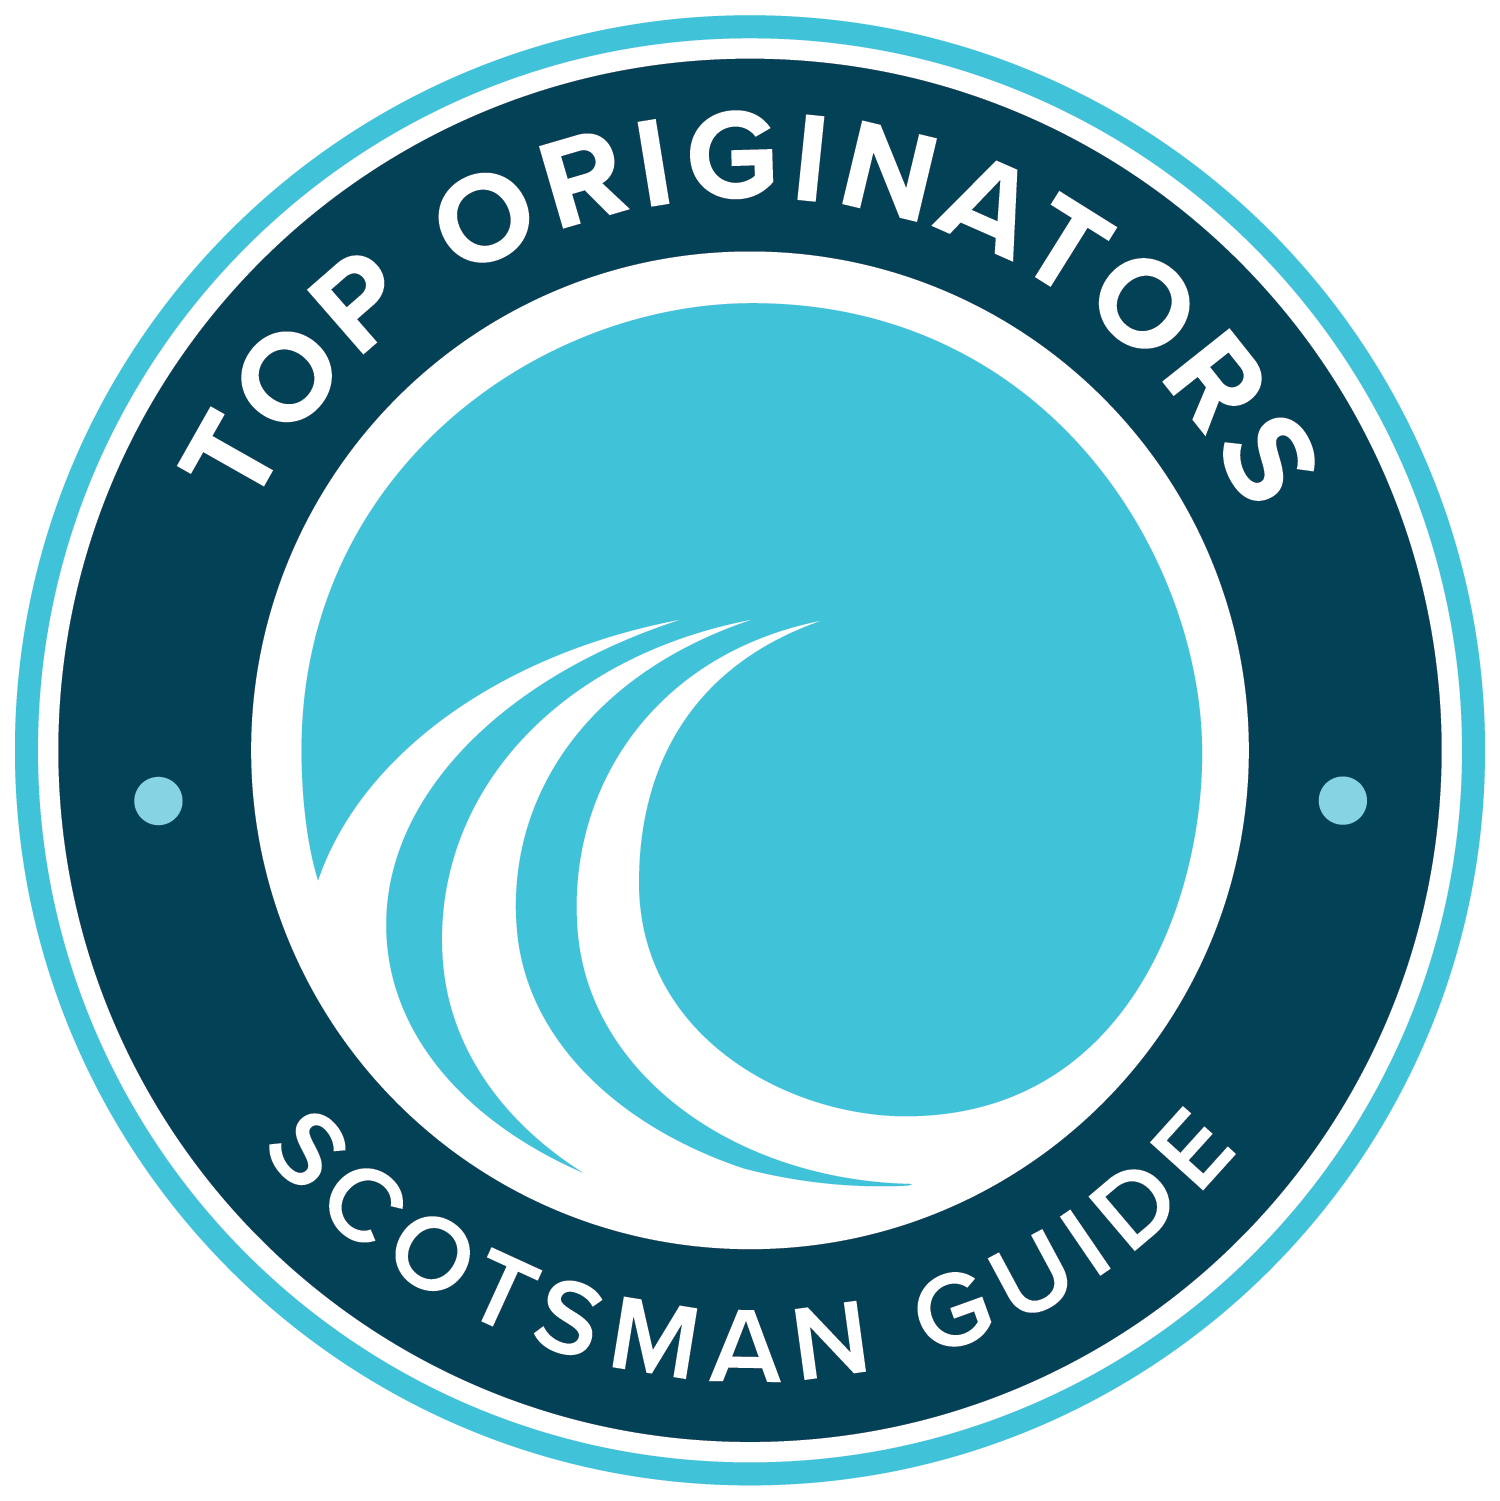 2022 Mortgage Brokers - Scotsman Guide